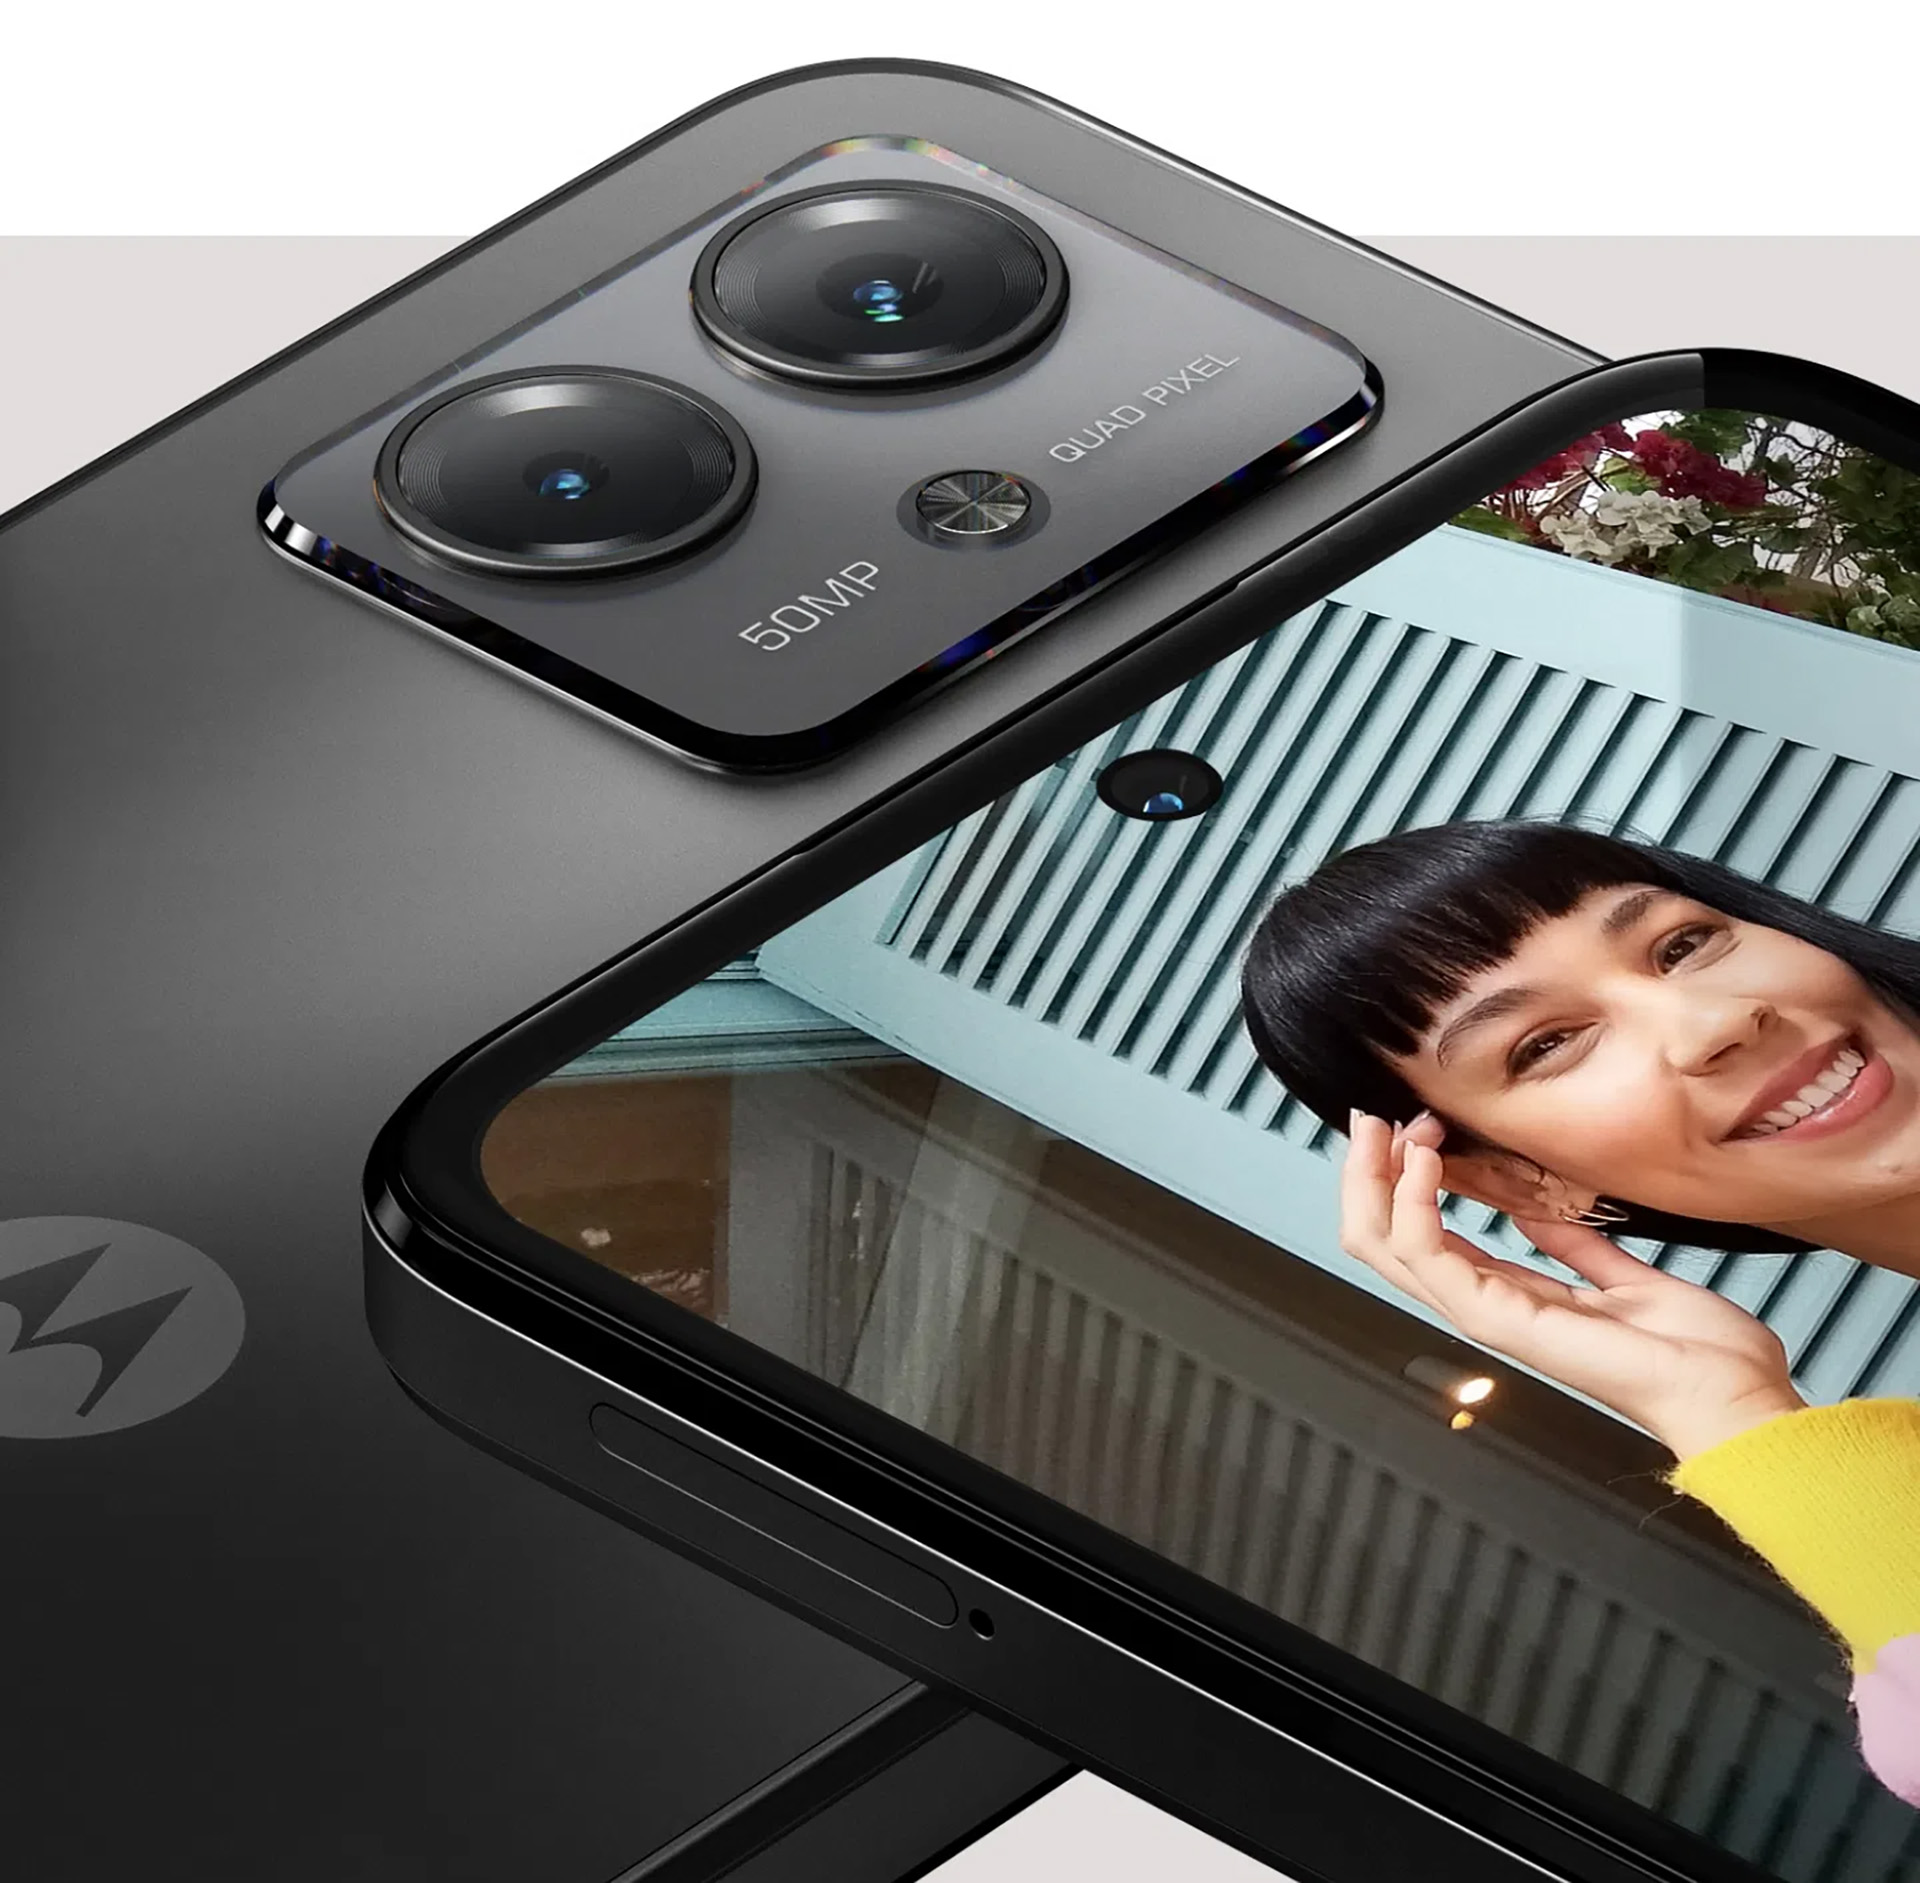 Motorola Moto G14 - full specs, details and review